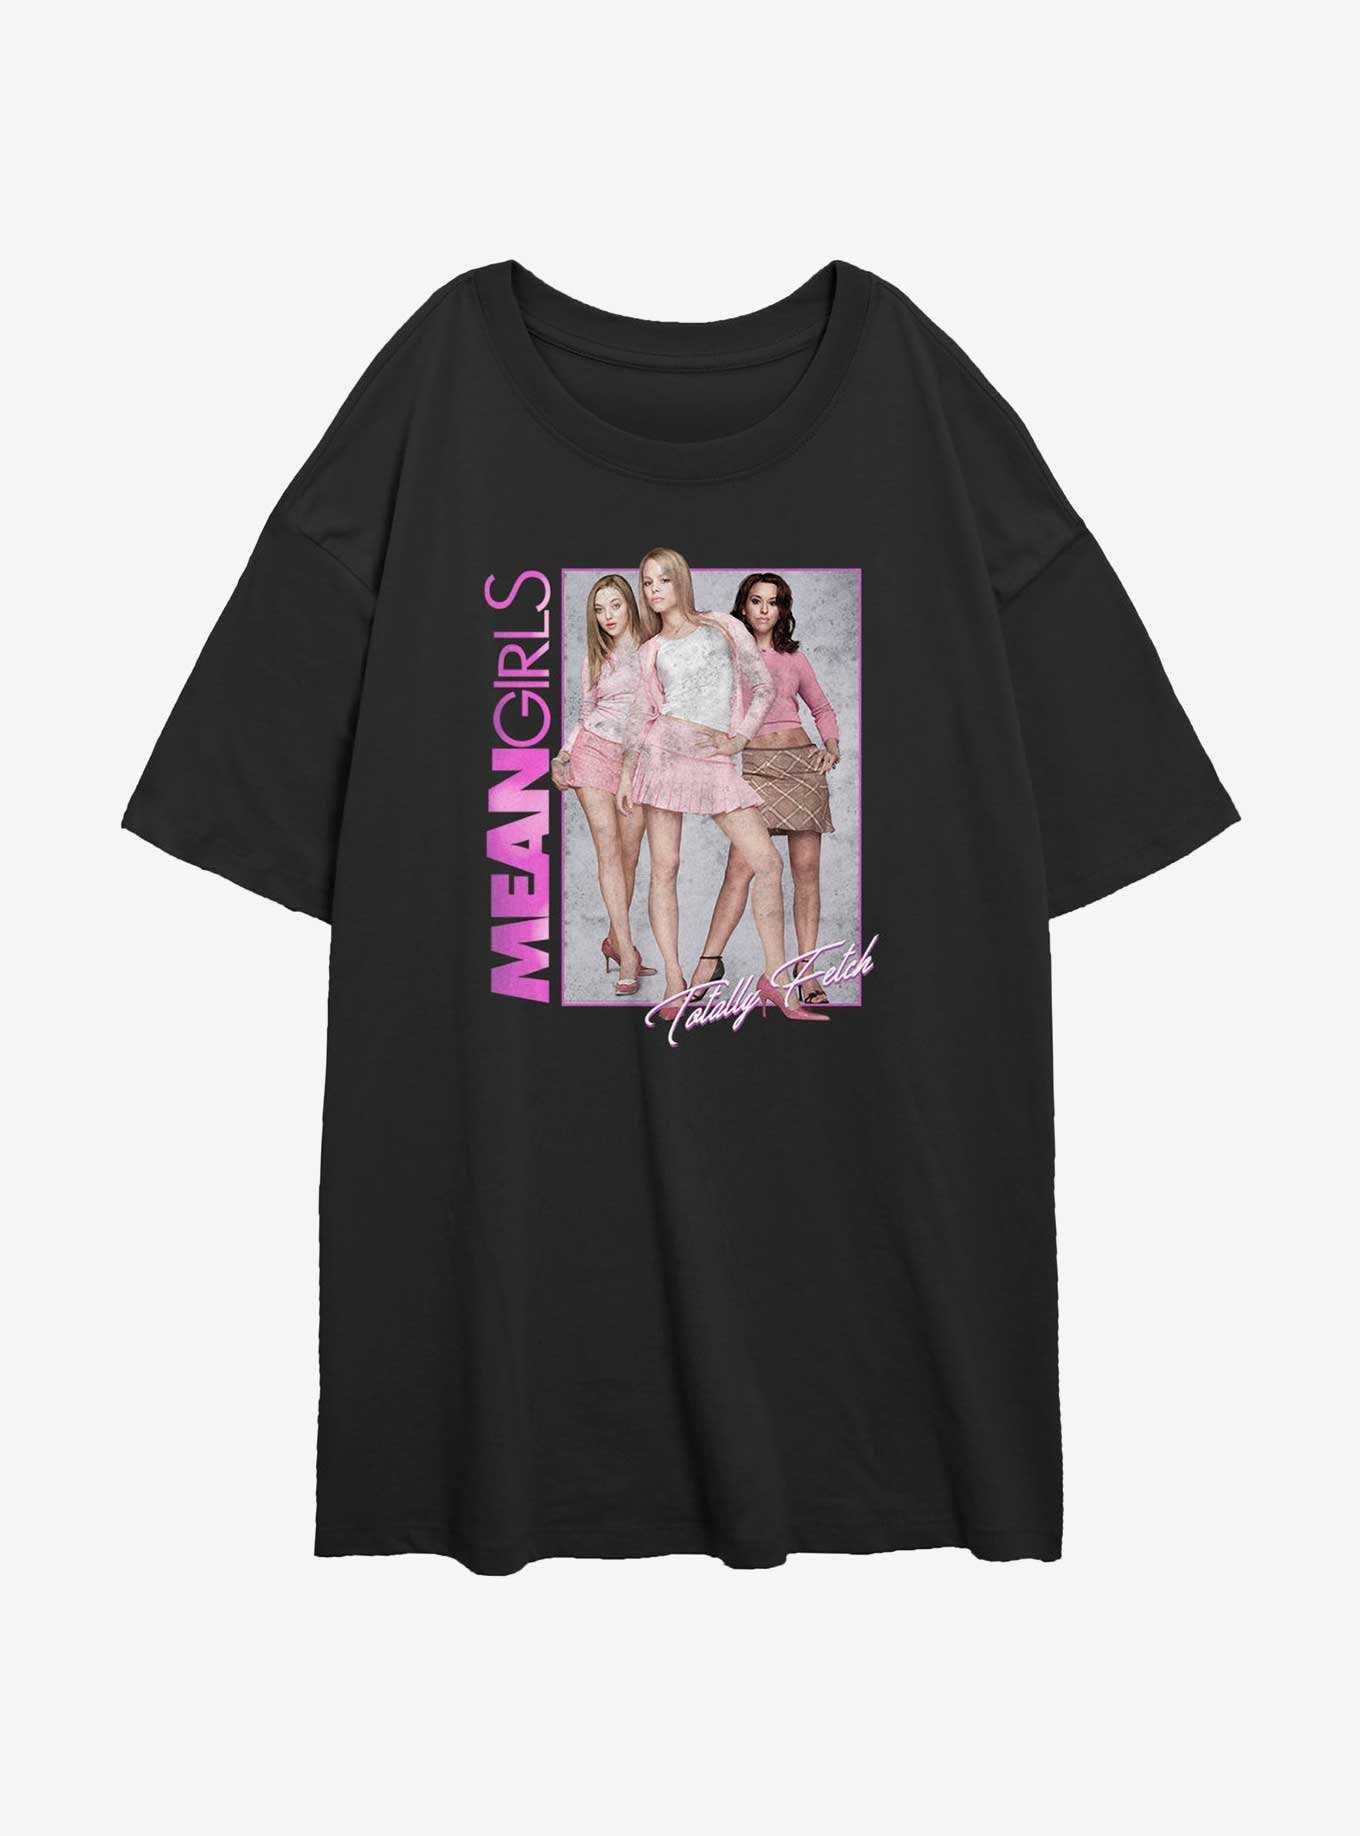 Really Mean Girls shirt - Kingteeshop